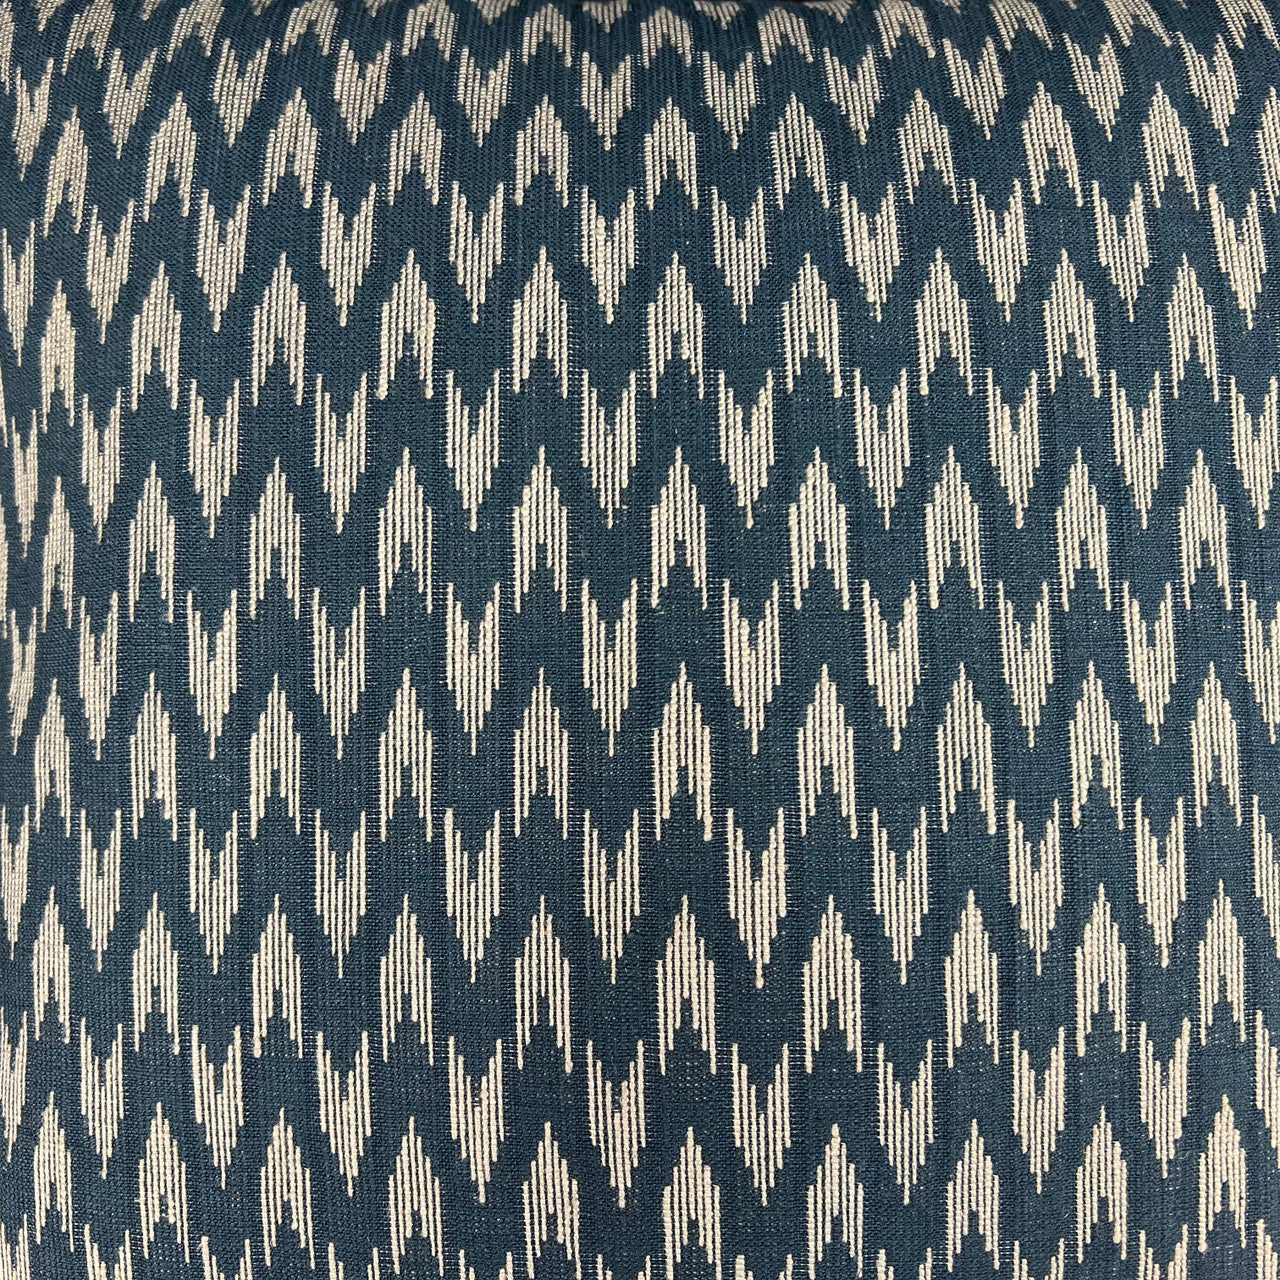 Luxury Designer Blue Geometric Weave Contemporary Cushion Throw Cover